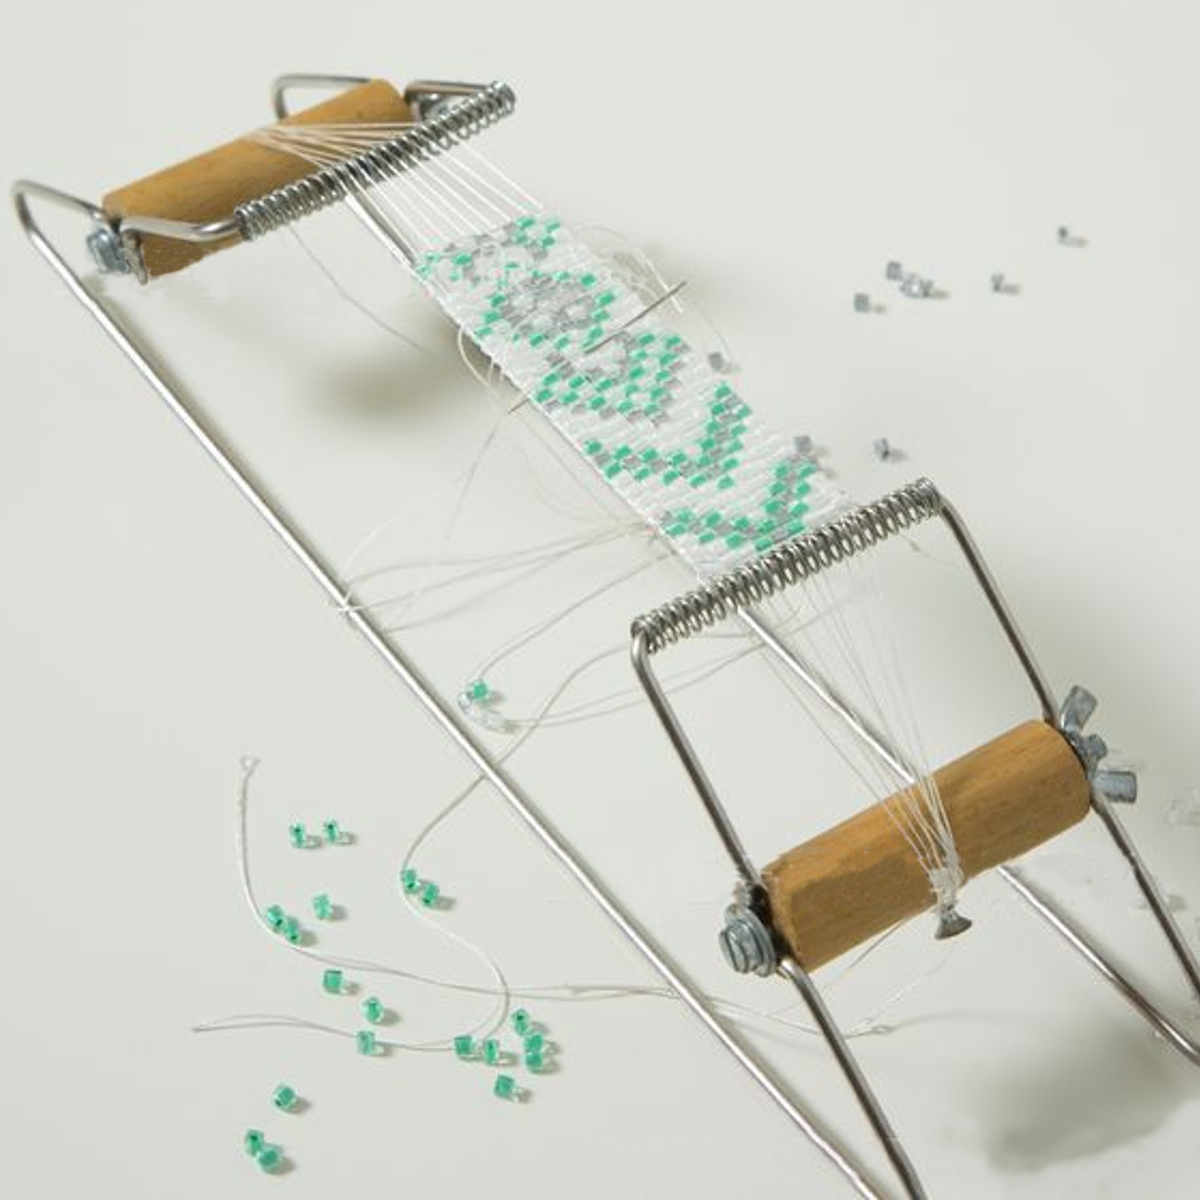 DIY-Beads-Loom-Art-Craft-Belt-Headband-Key-Chain-Weaving-Making-Machine-Beading-Tool-1379563